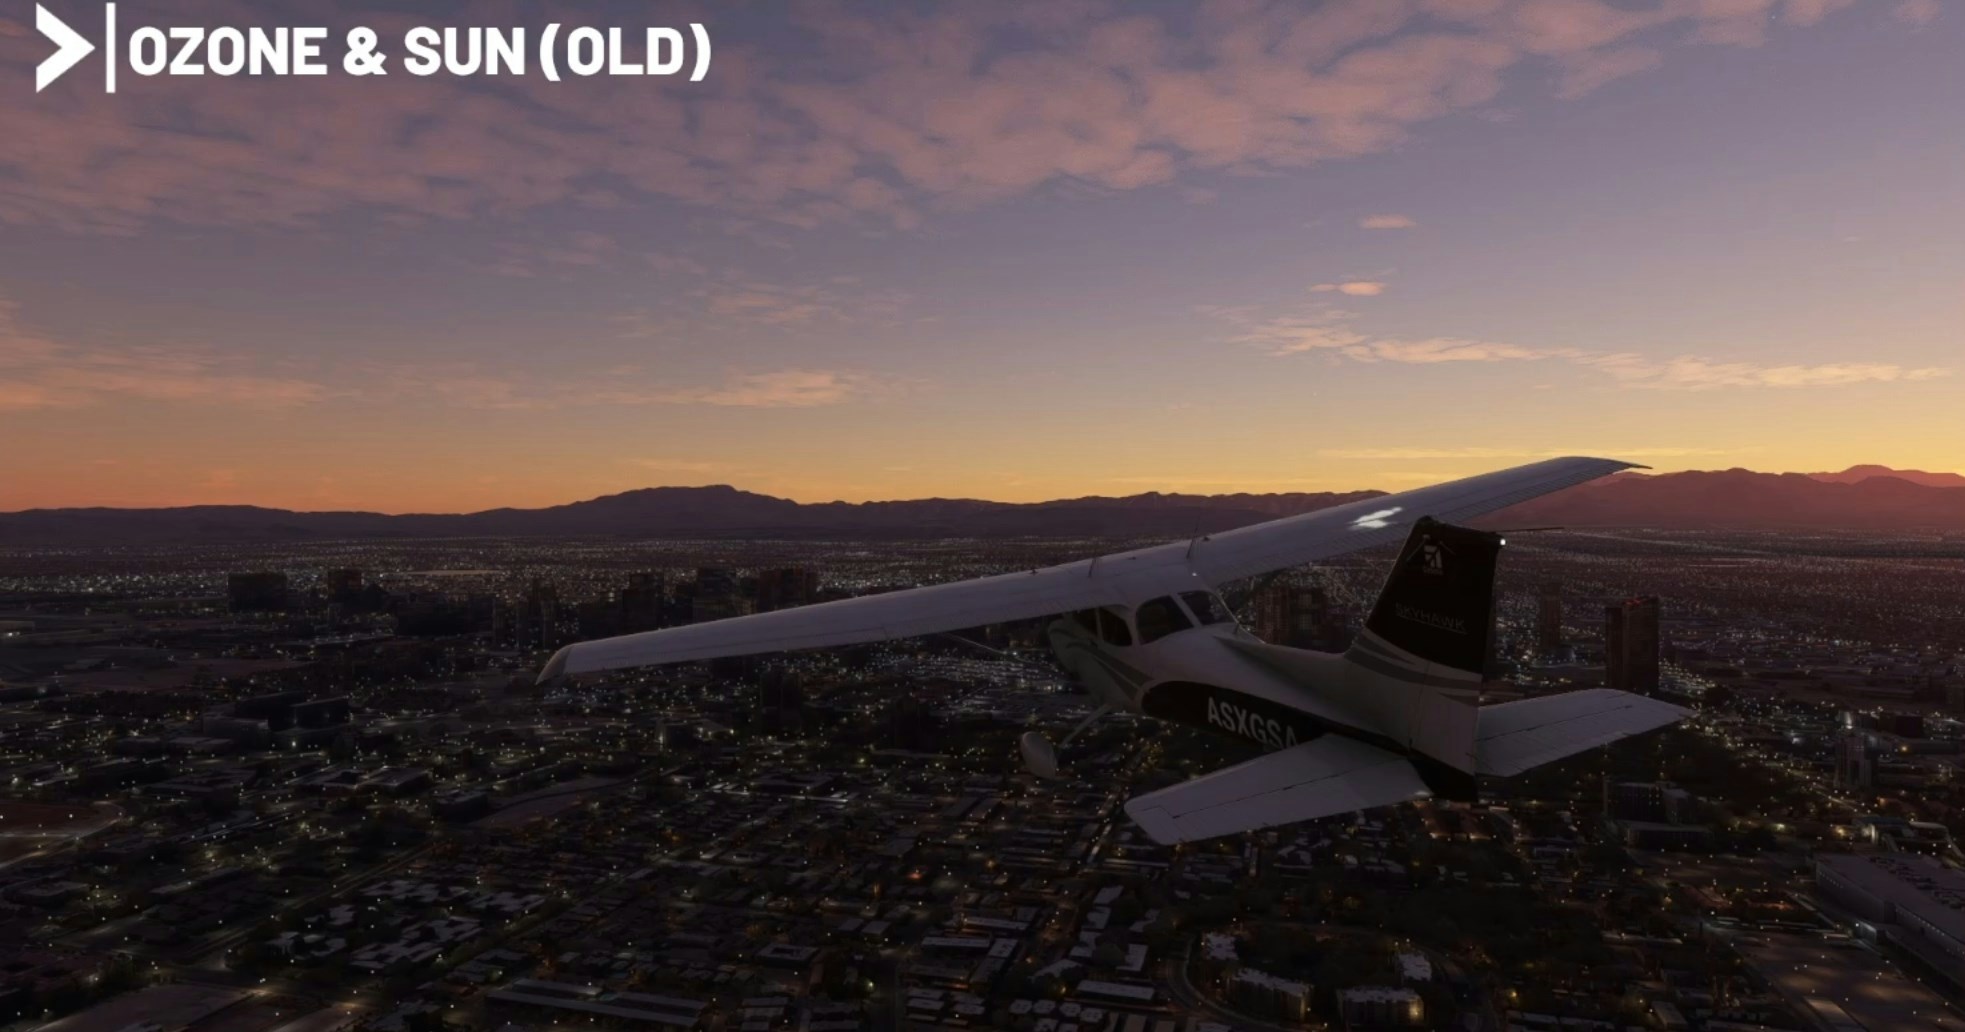 Microsoft Flight Simulator Sim Update 14 is Now Available